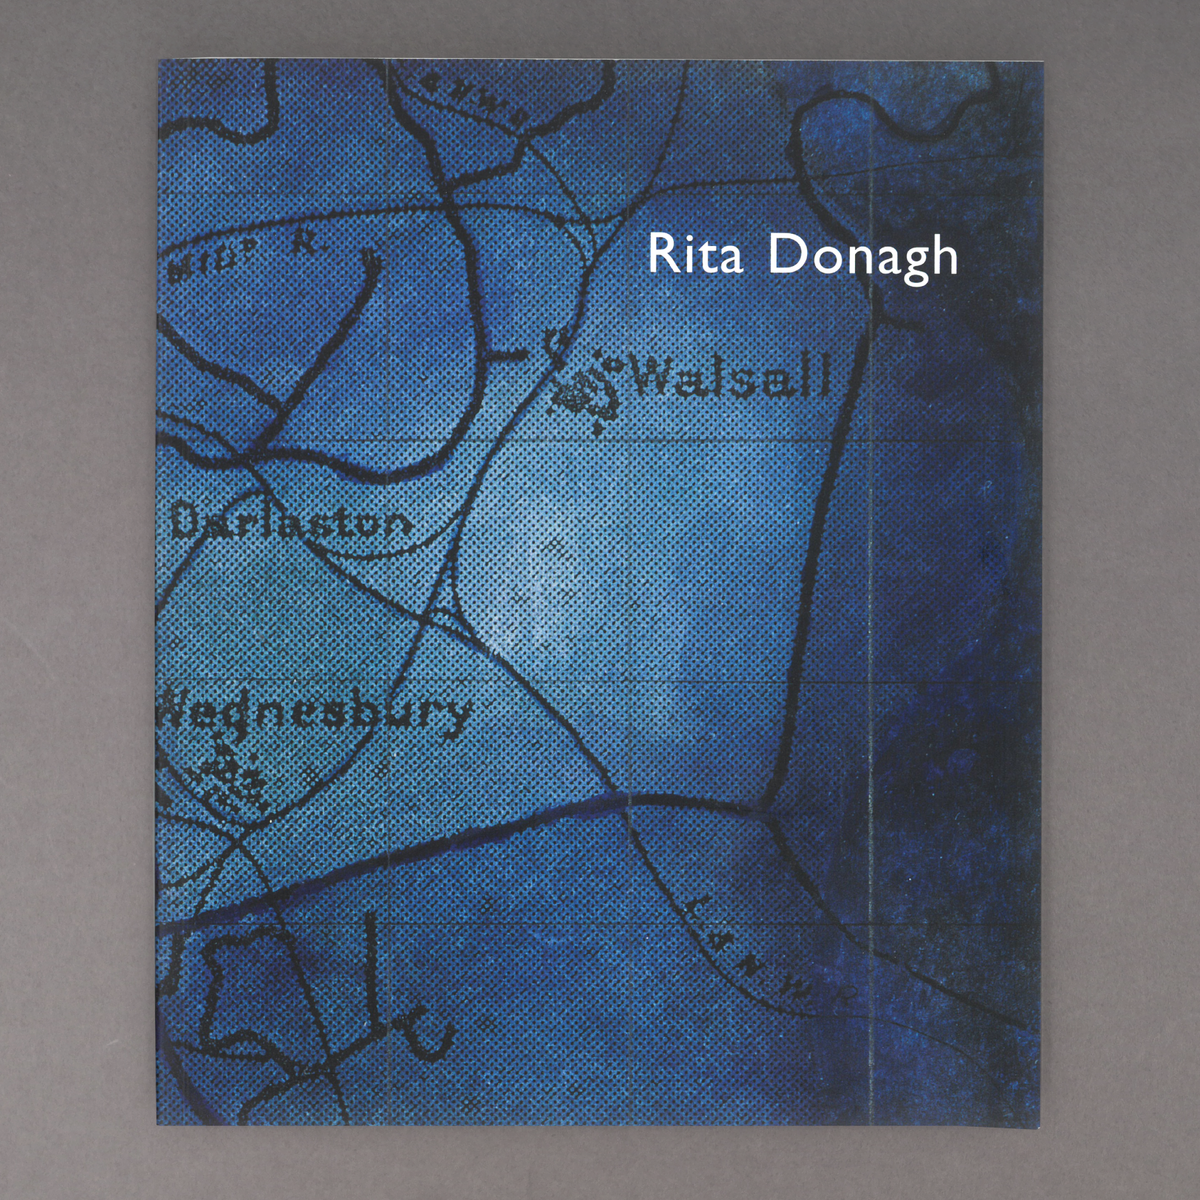 Rita Donagh